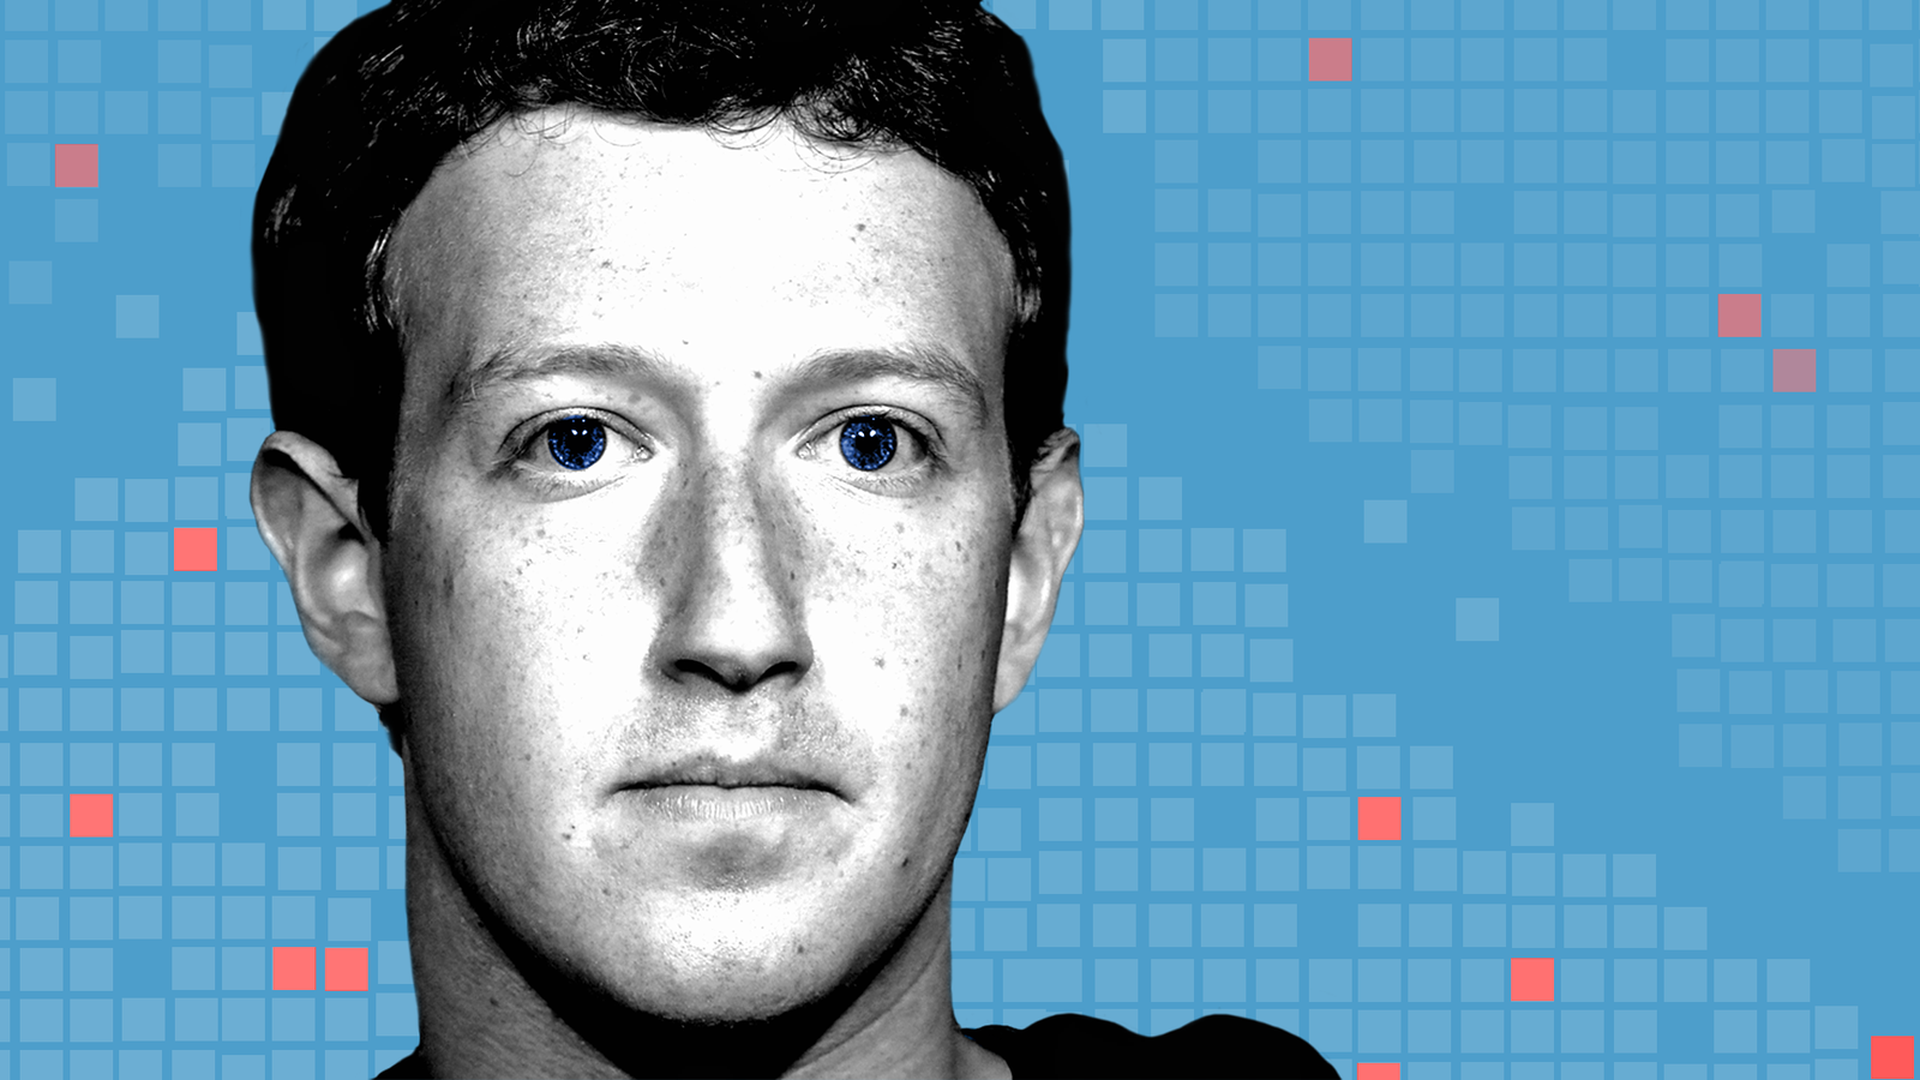 Illustration of Mark Zuckerberg's face against a grid background